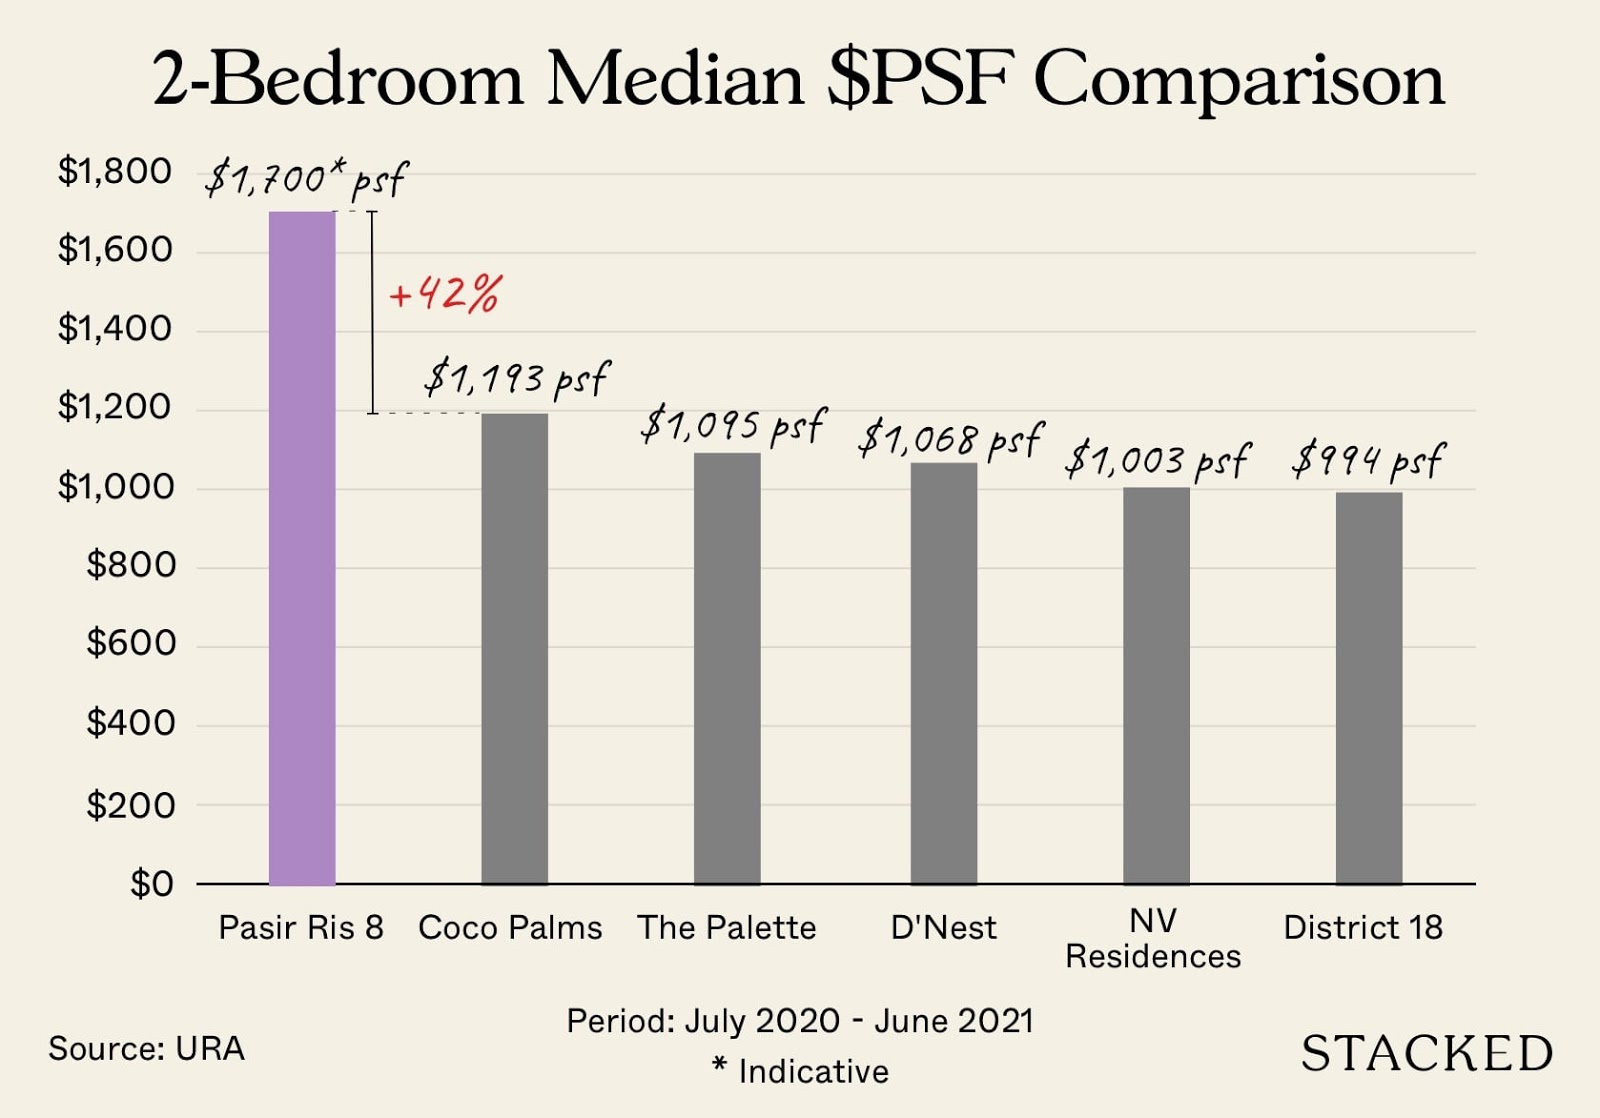 pasir ris 8 2 bedroom median psf comparison